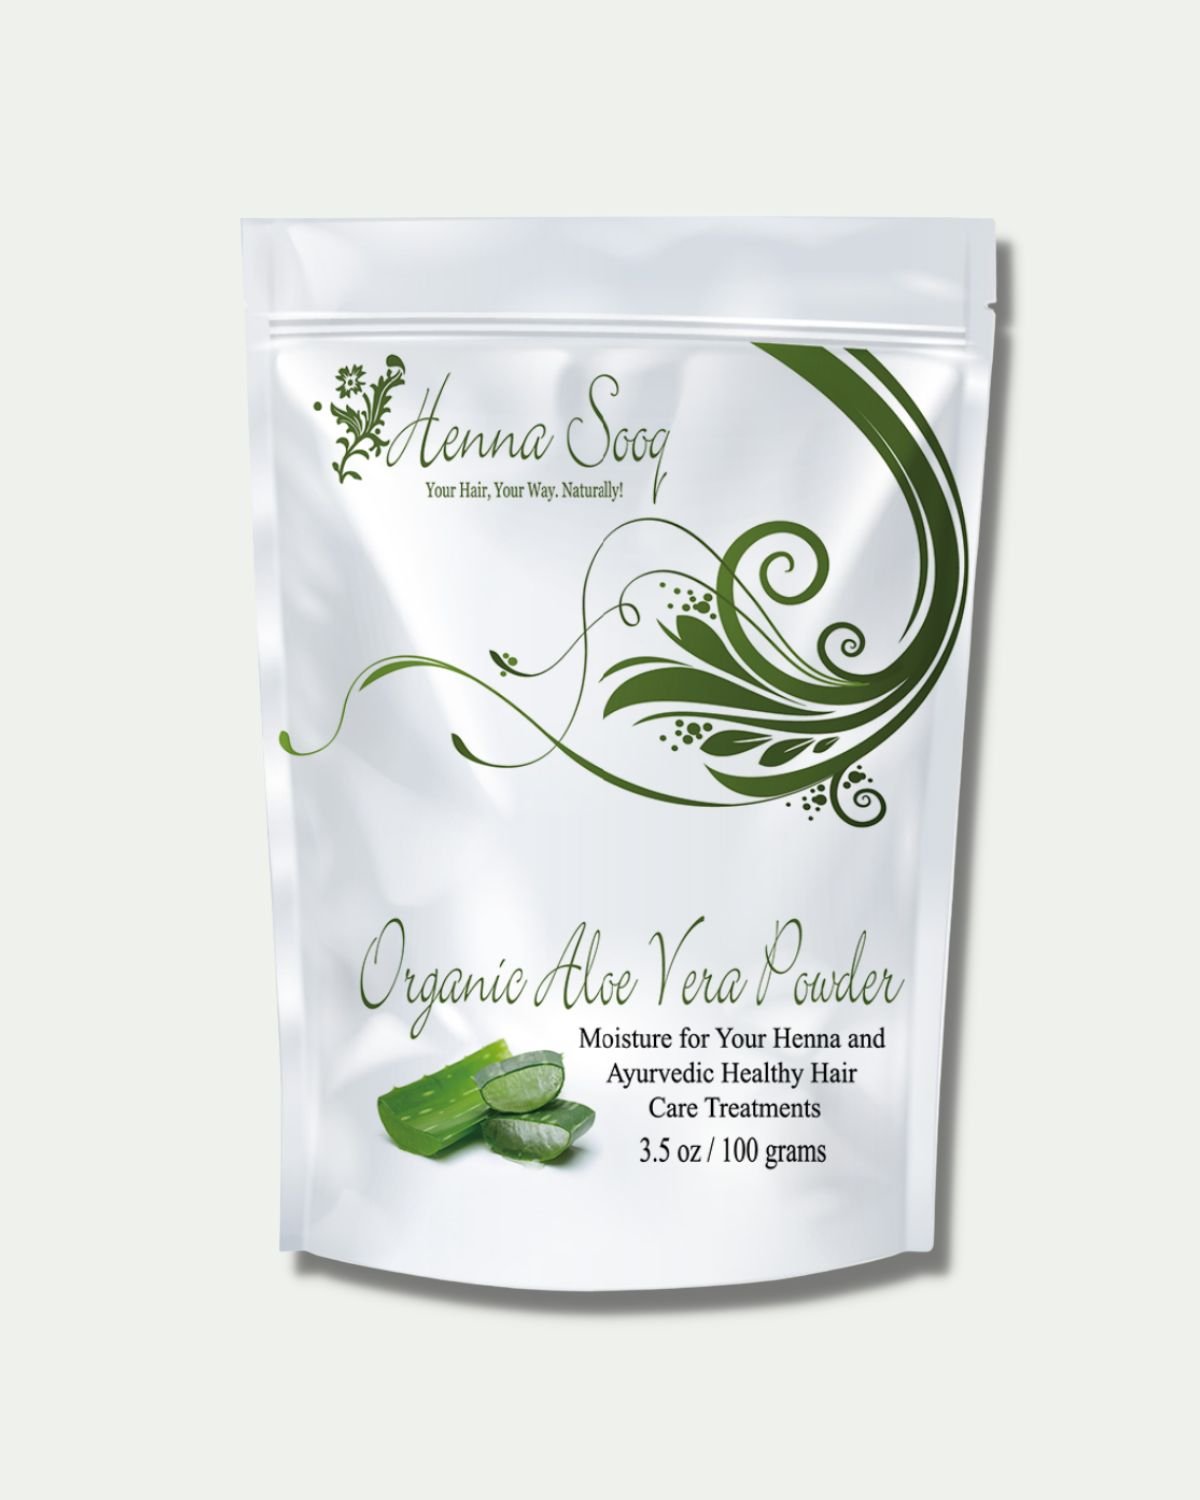 Organic Aloe Vera Powder - Henna Sooq